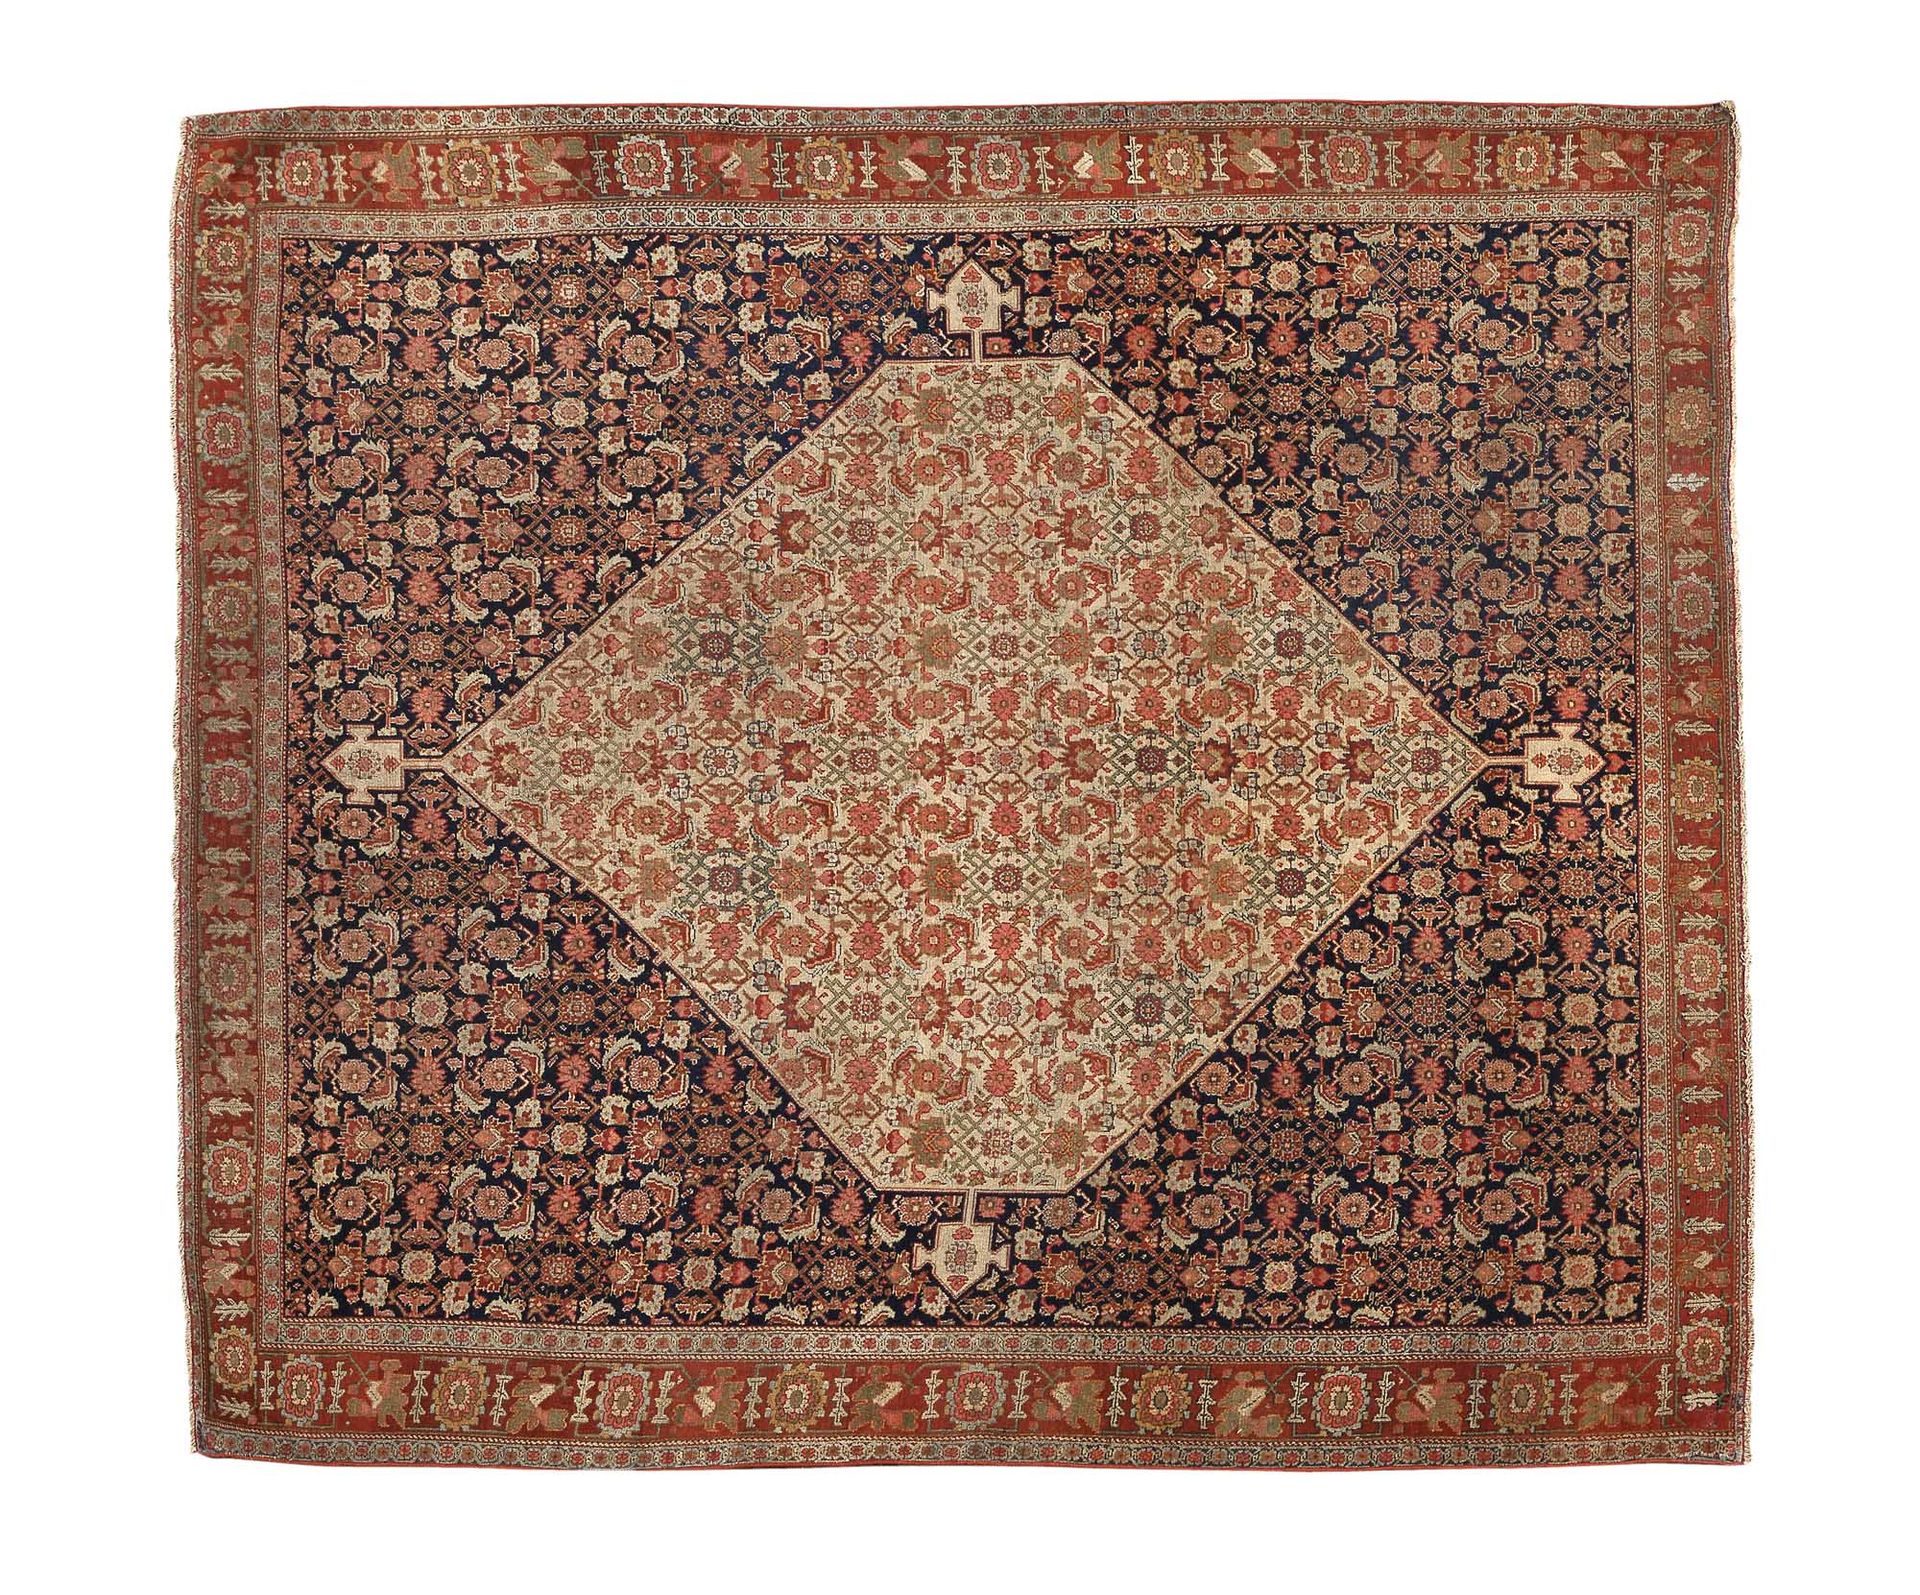 Null Fine SENNEH carpet (Persia), late 19th century

Dimensions : 180 x 155cm

T&hellip;